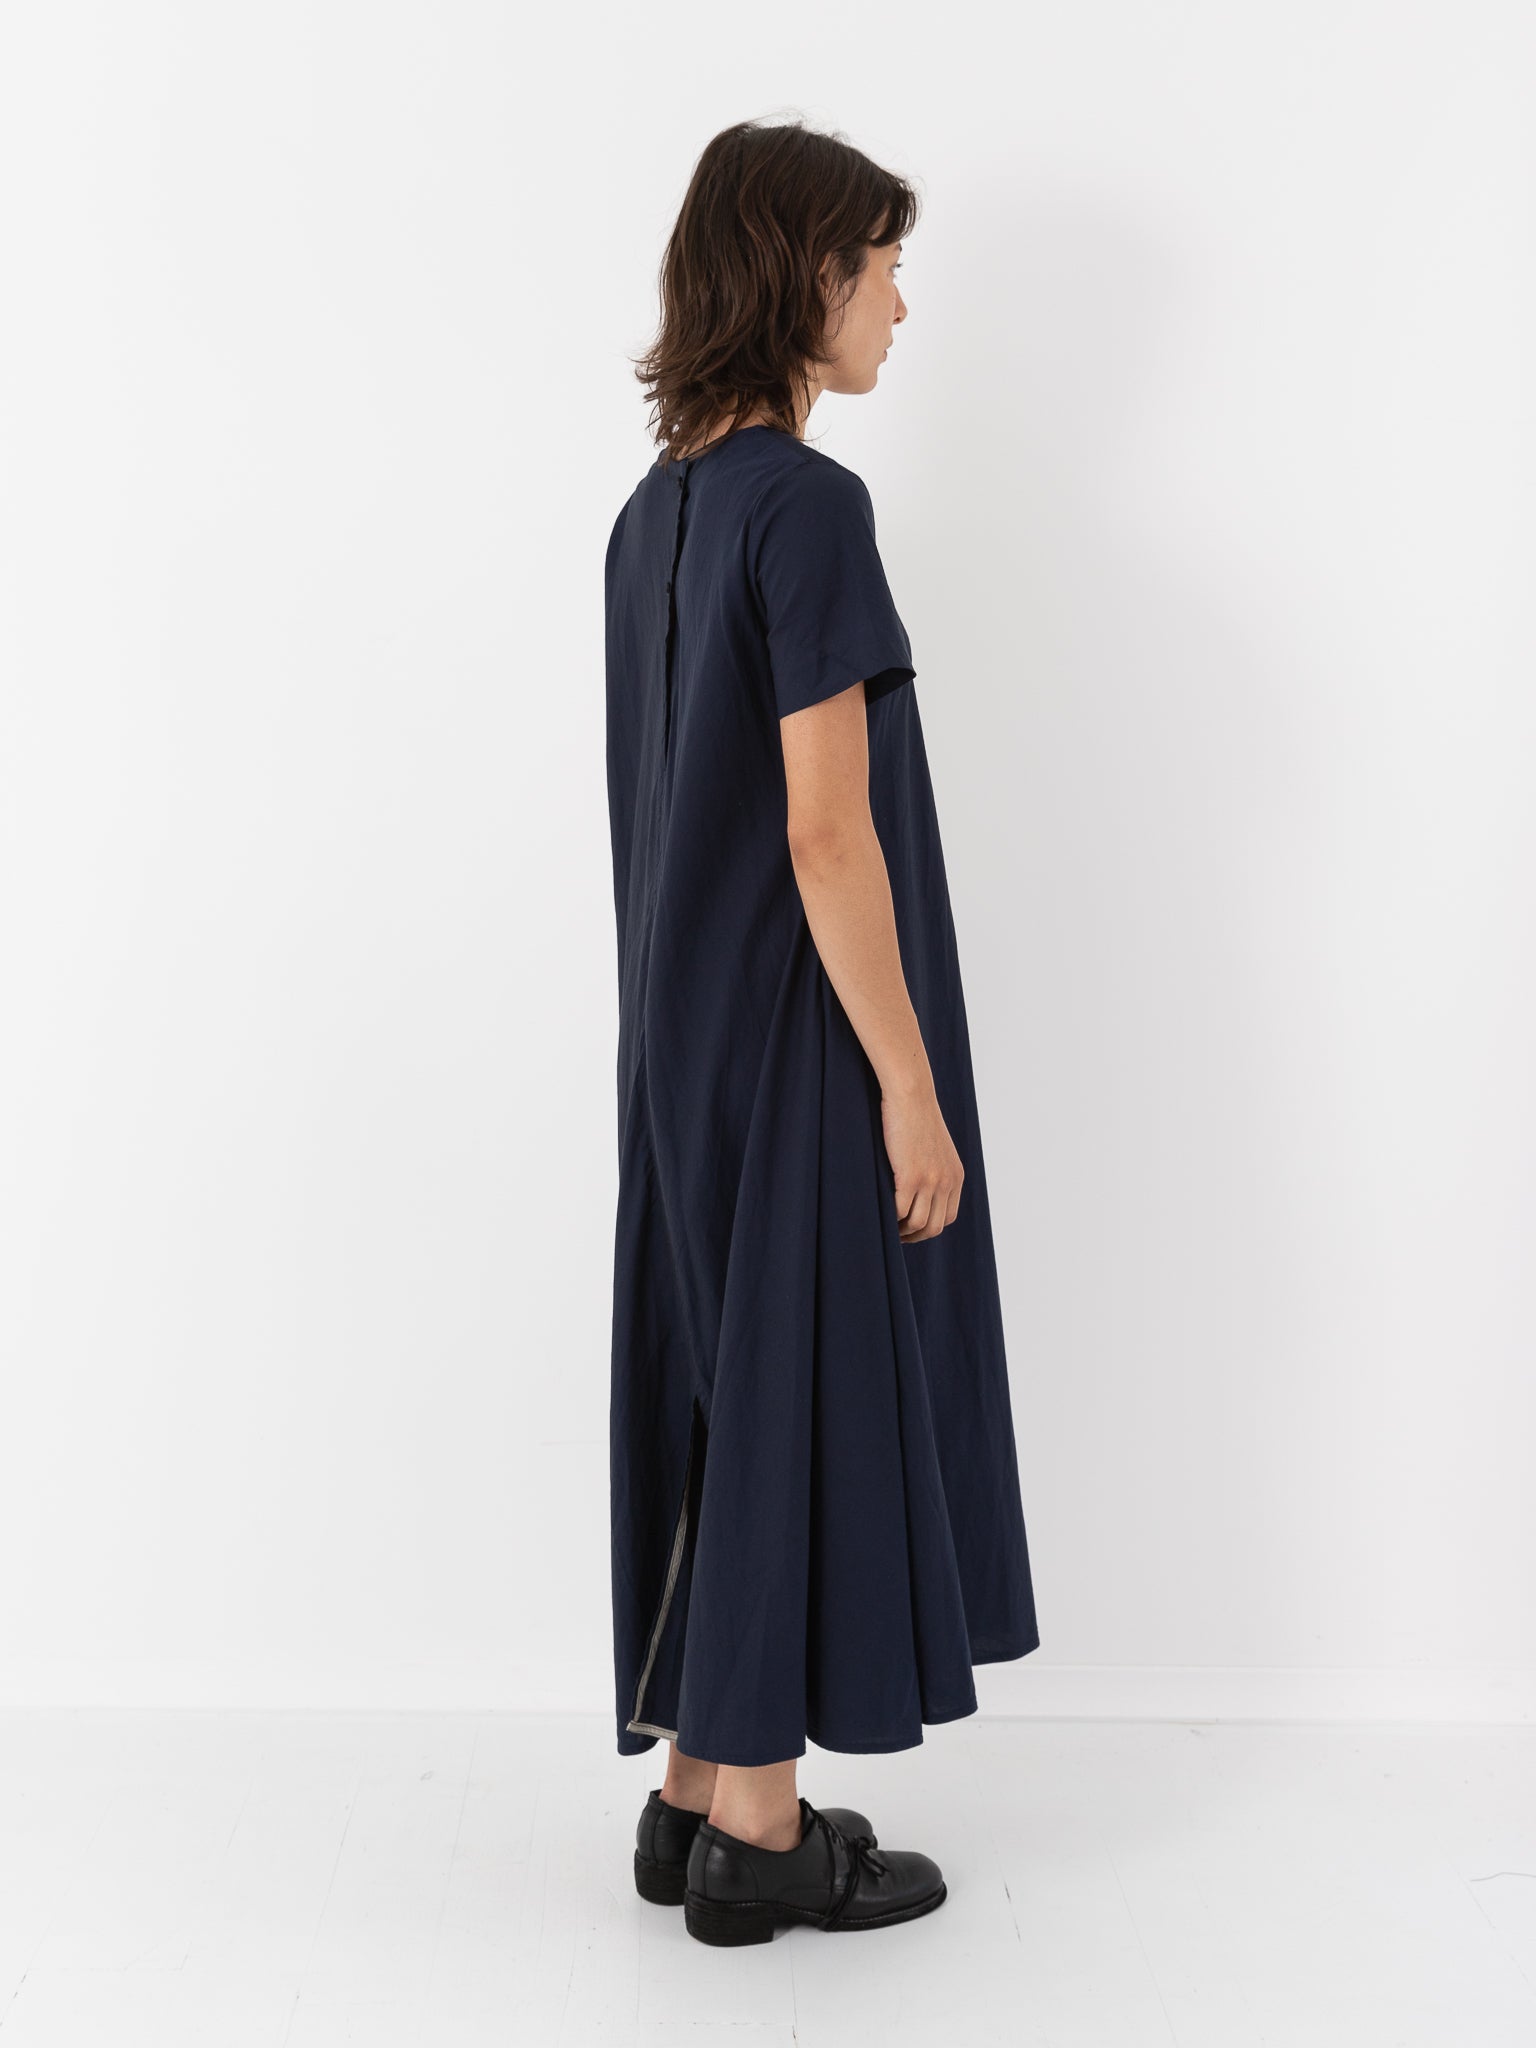 Atelier Suppan Twisted Dress, Dark Blue - Worthwhile